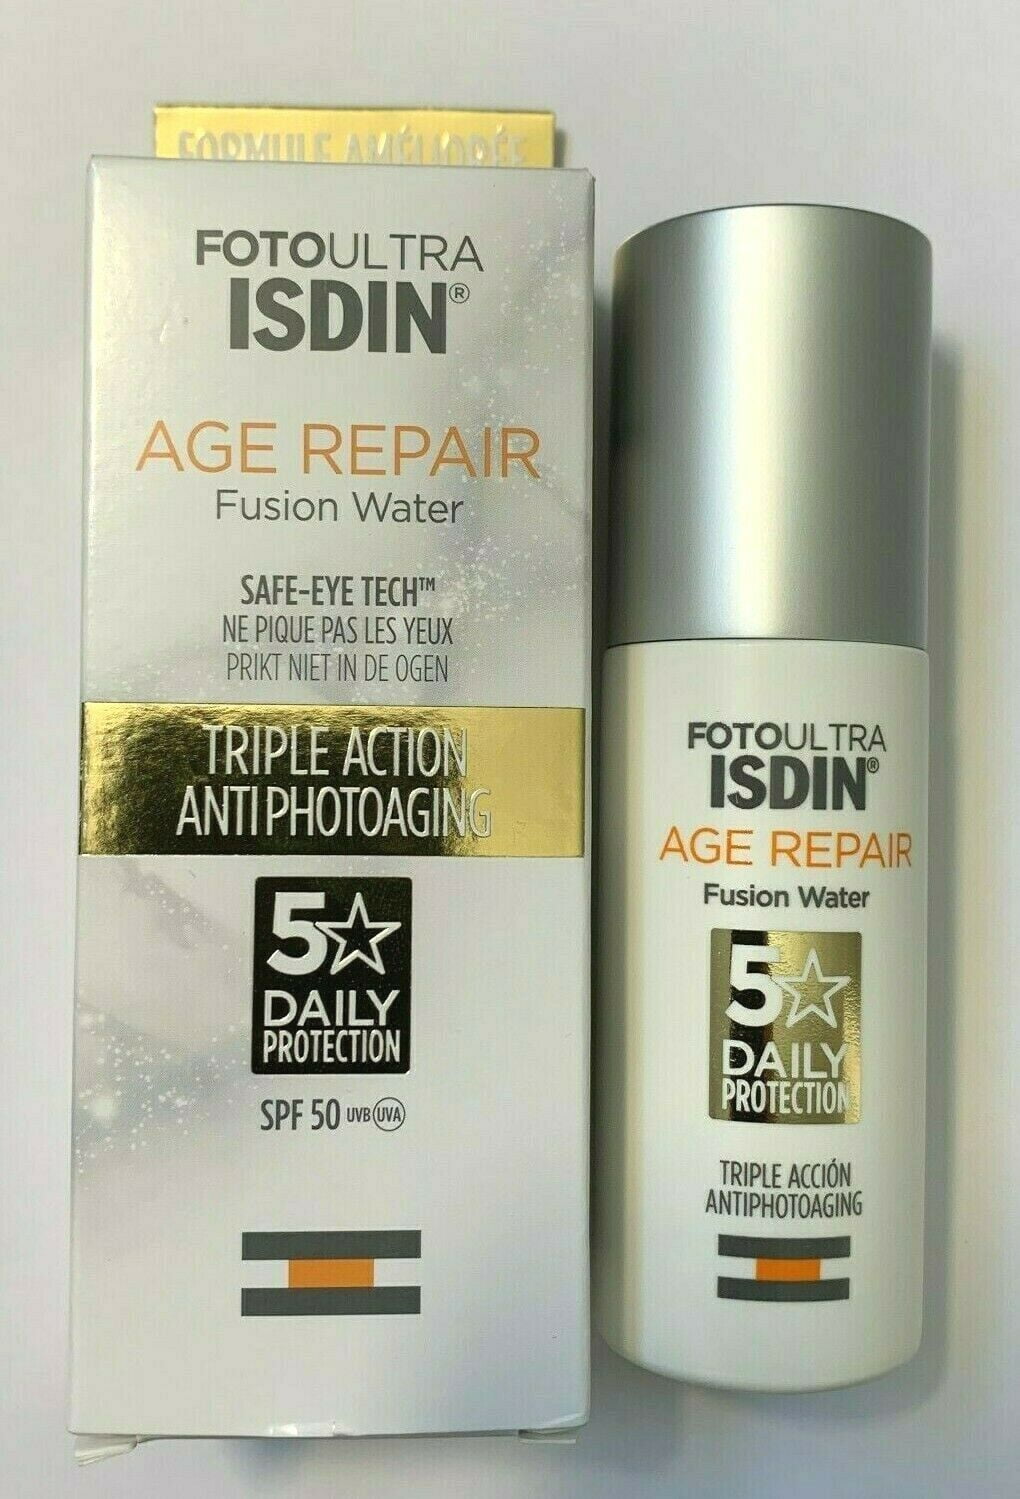 ISDIN FOTOULTRA age Repair Color. Купить ISDIN солнцезащитный крем ISDIN FOTOULTRA age Repair FW spf50 50ml.